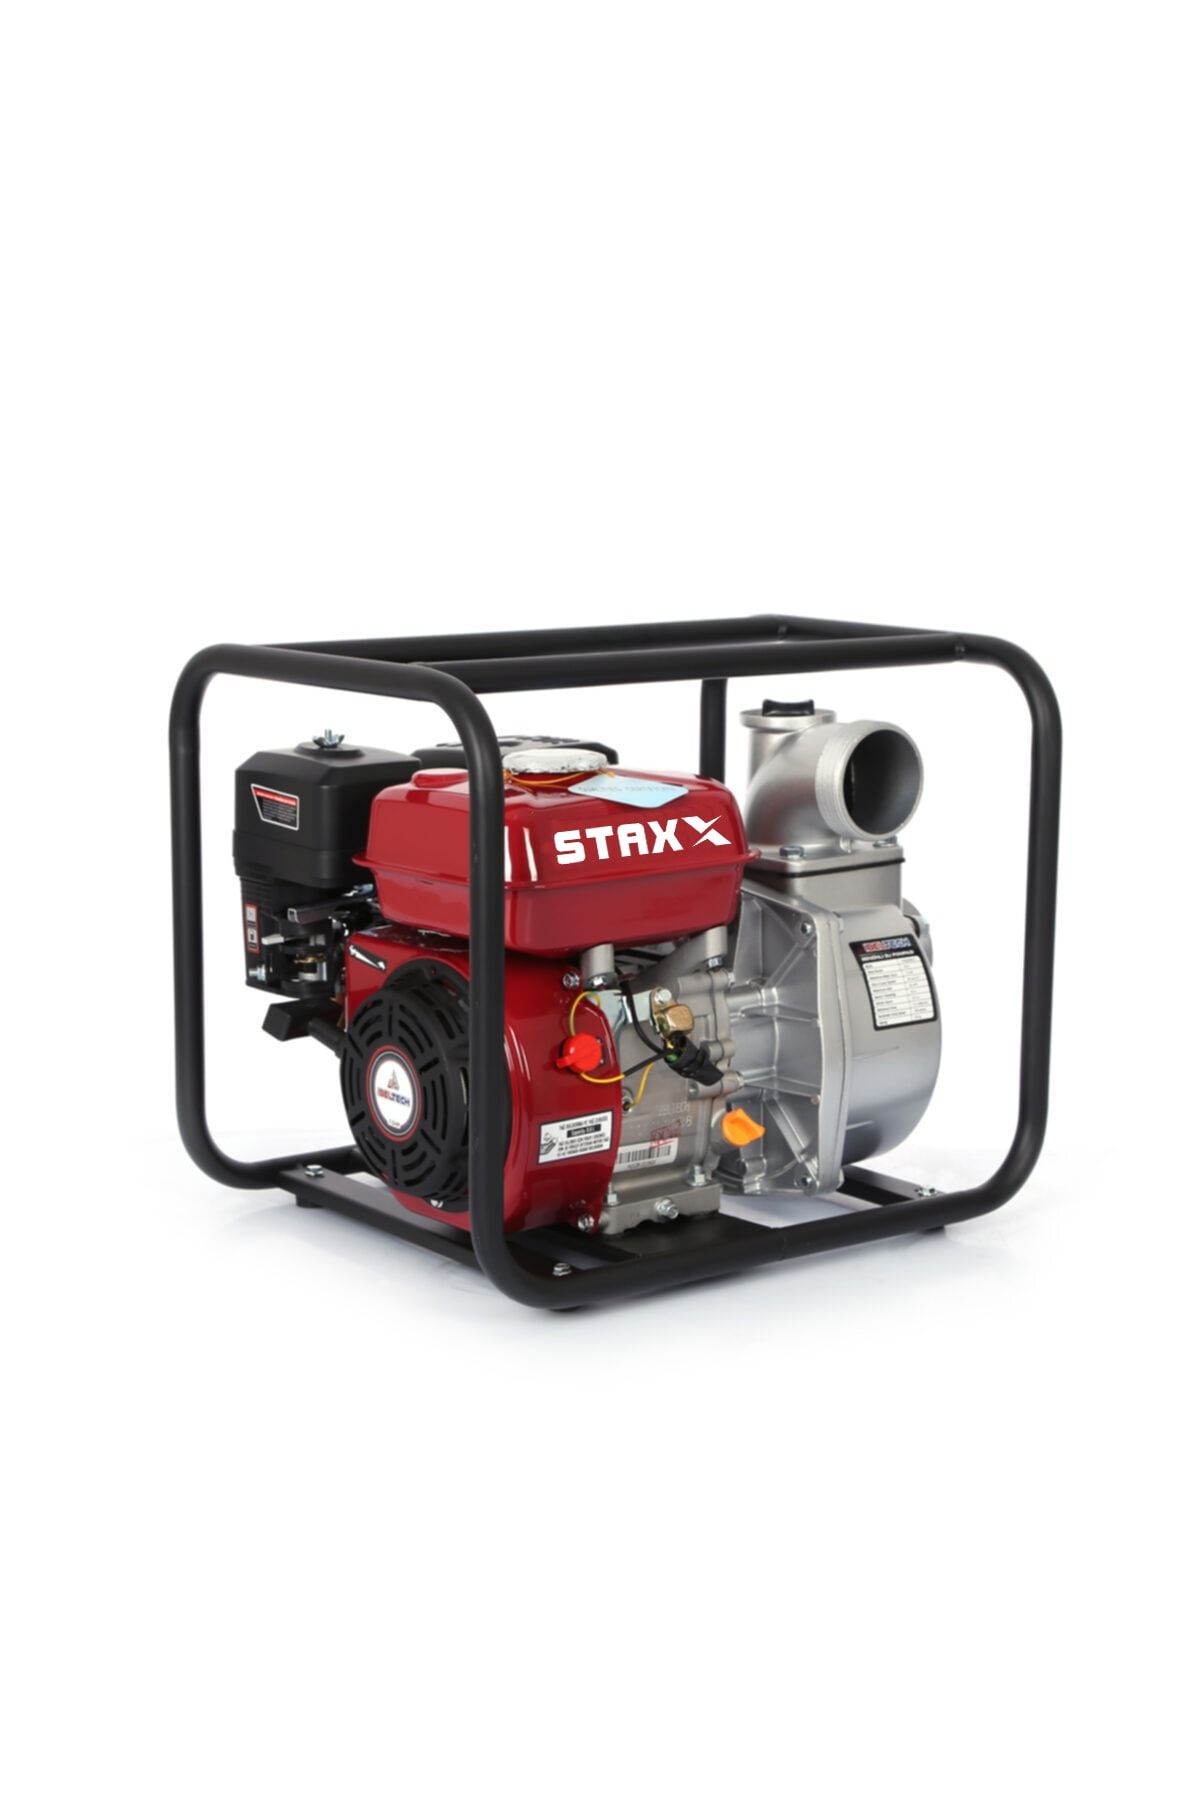 STAXX POWER 4 Zamanlı Benzinli Su Pompası Motopump 3" 6.5 Hp Ultra Power 26mt Dik Basınç 8mt Emiş